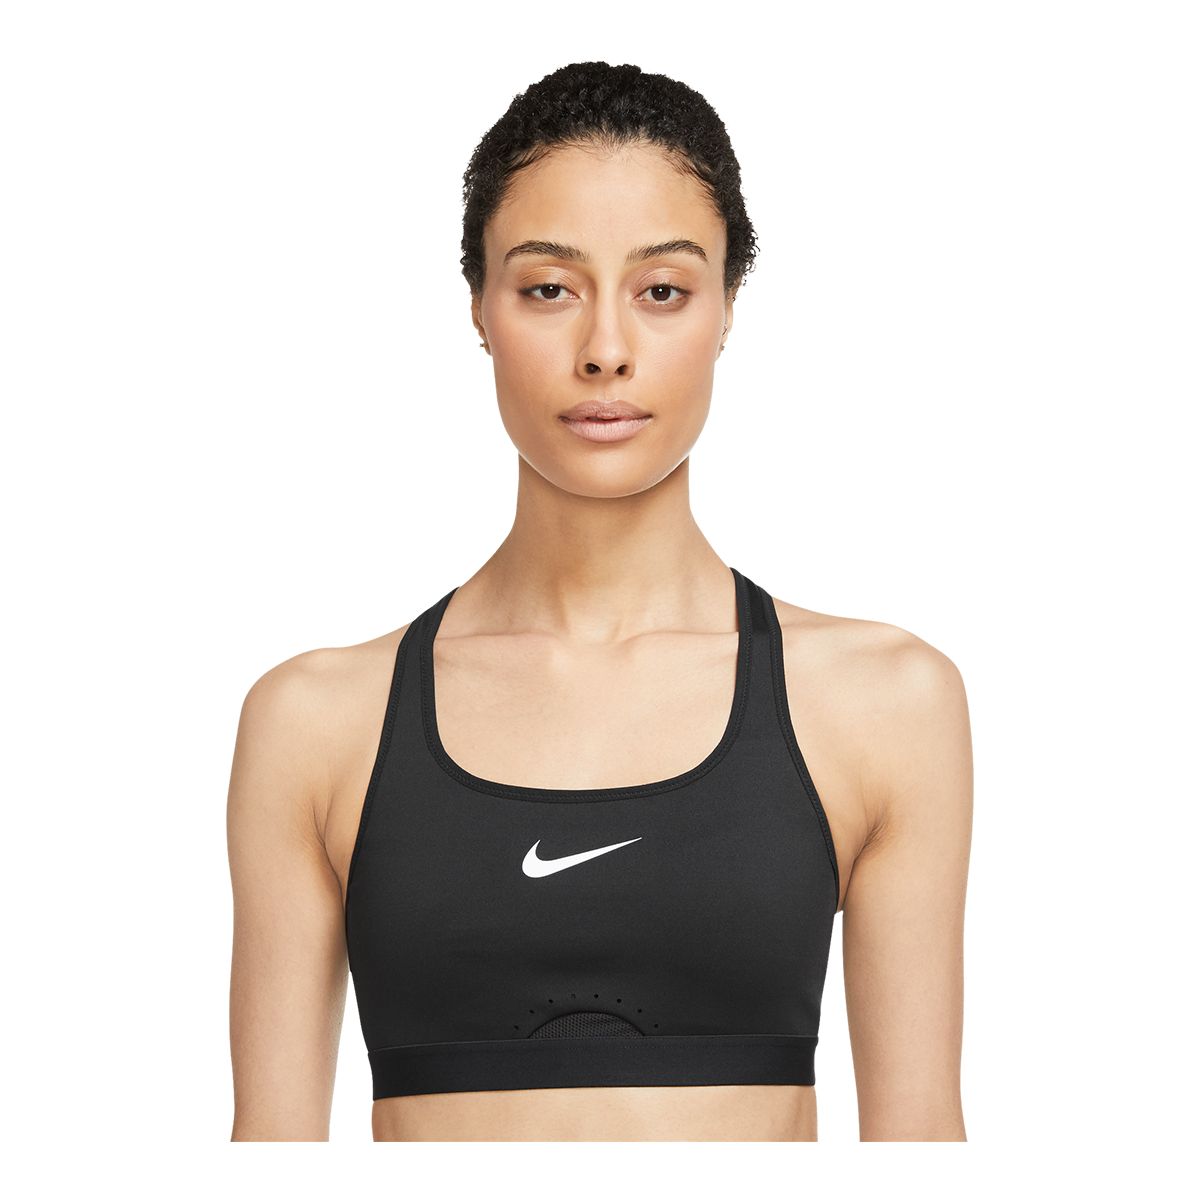 Nike sports bra size small